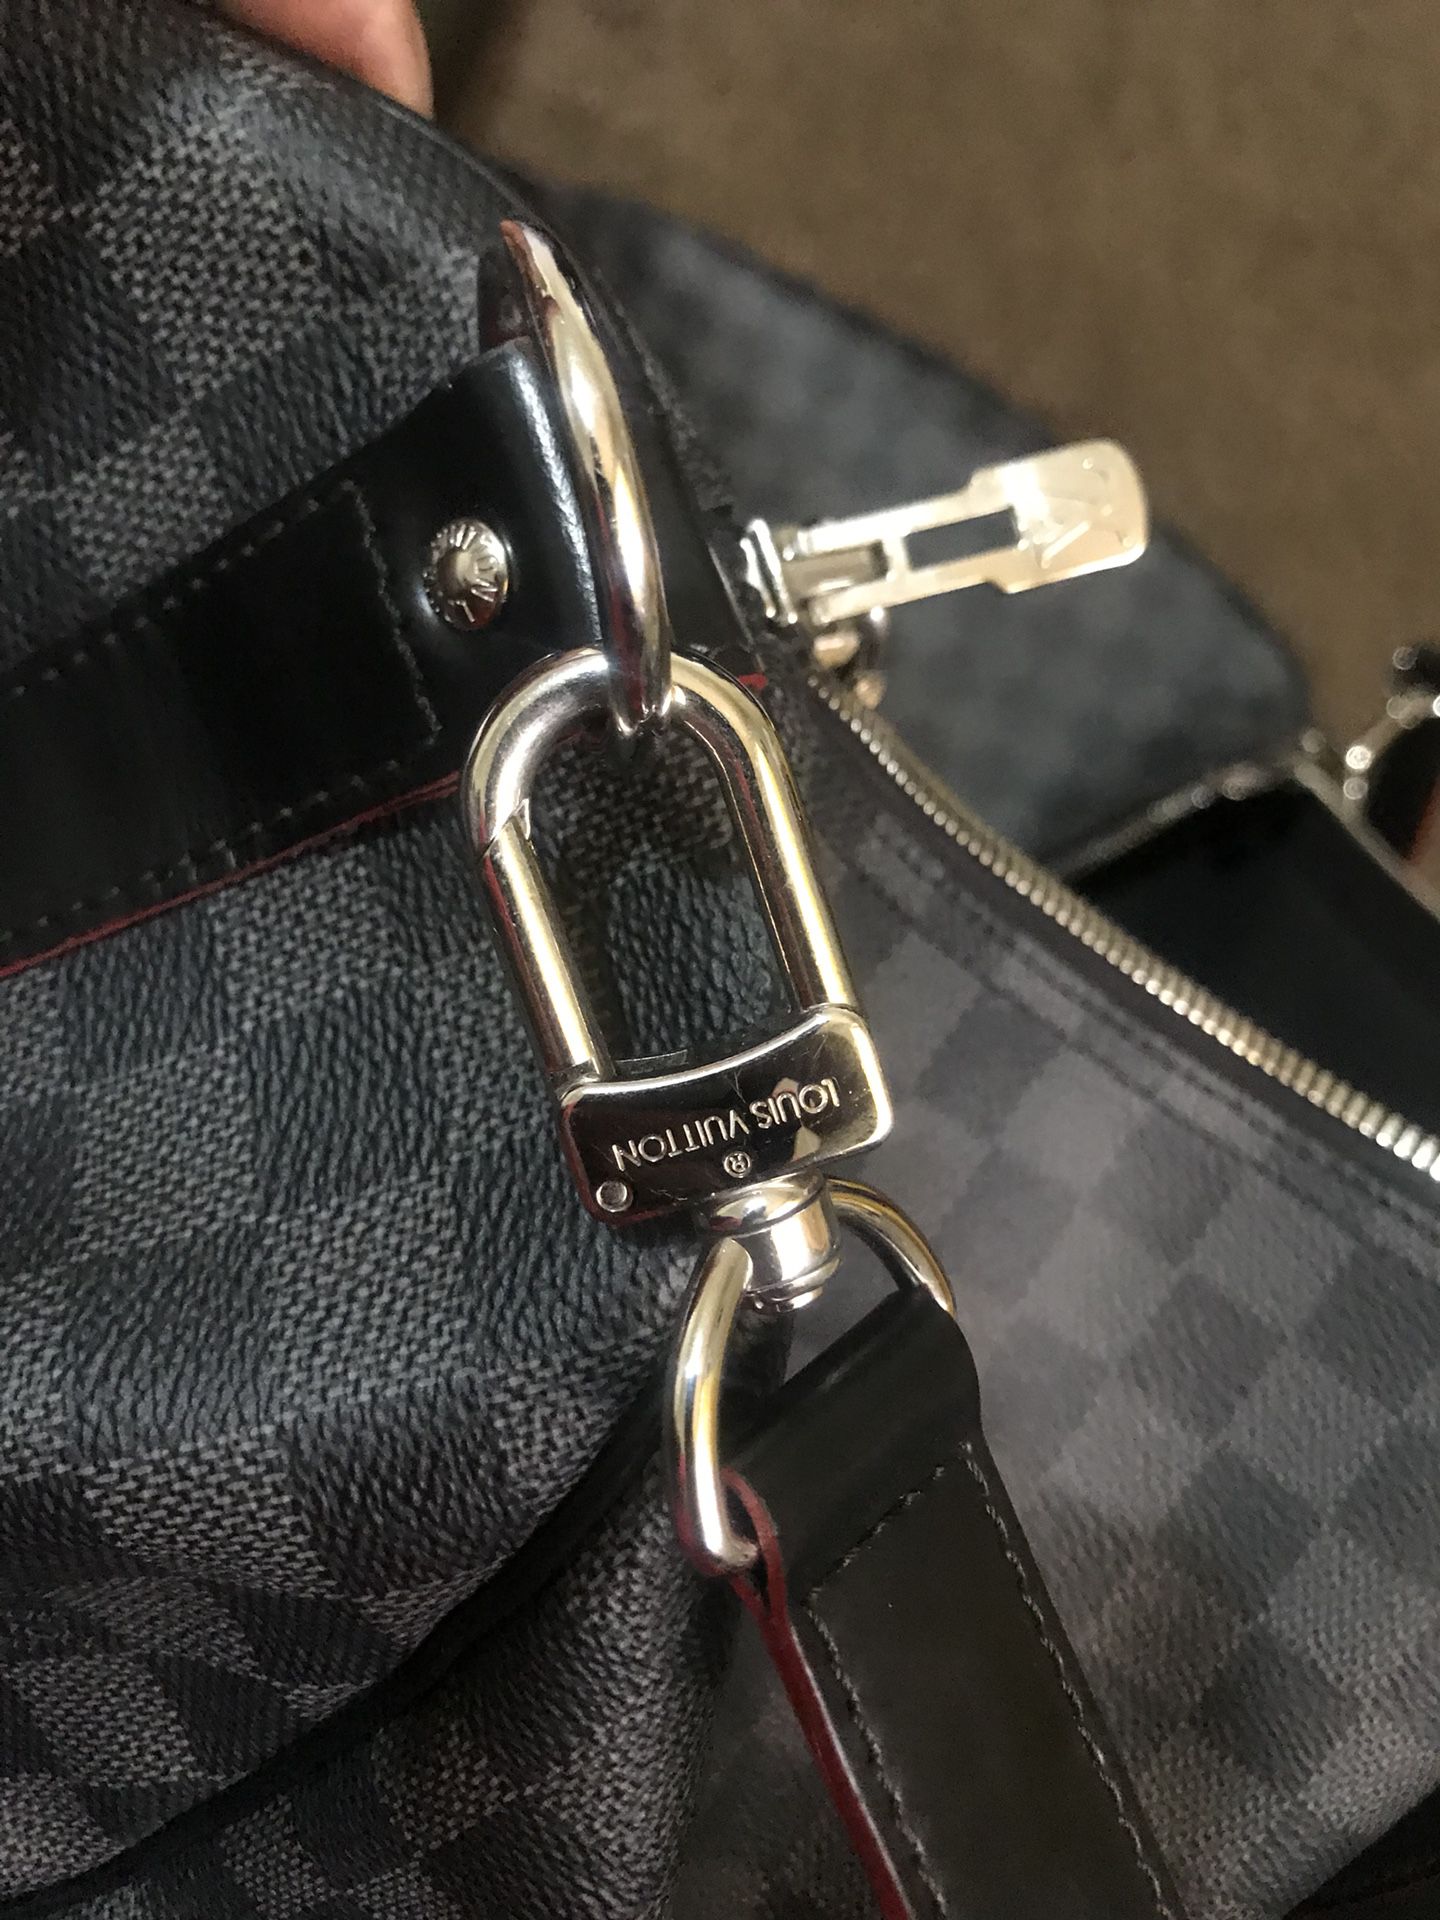 Louis Vuitton Monogram Luco Shoulder Bag SR0979 for Sale in Gilbert, AZ -  OfferUp